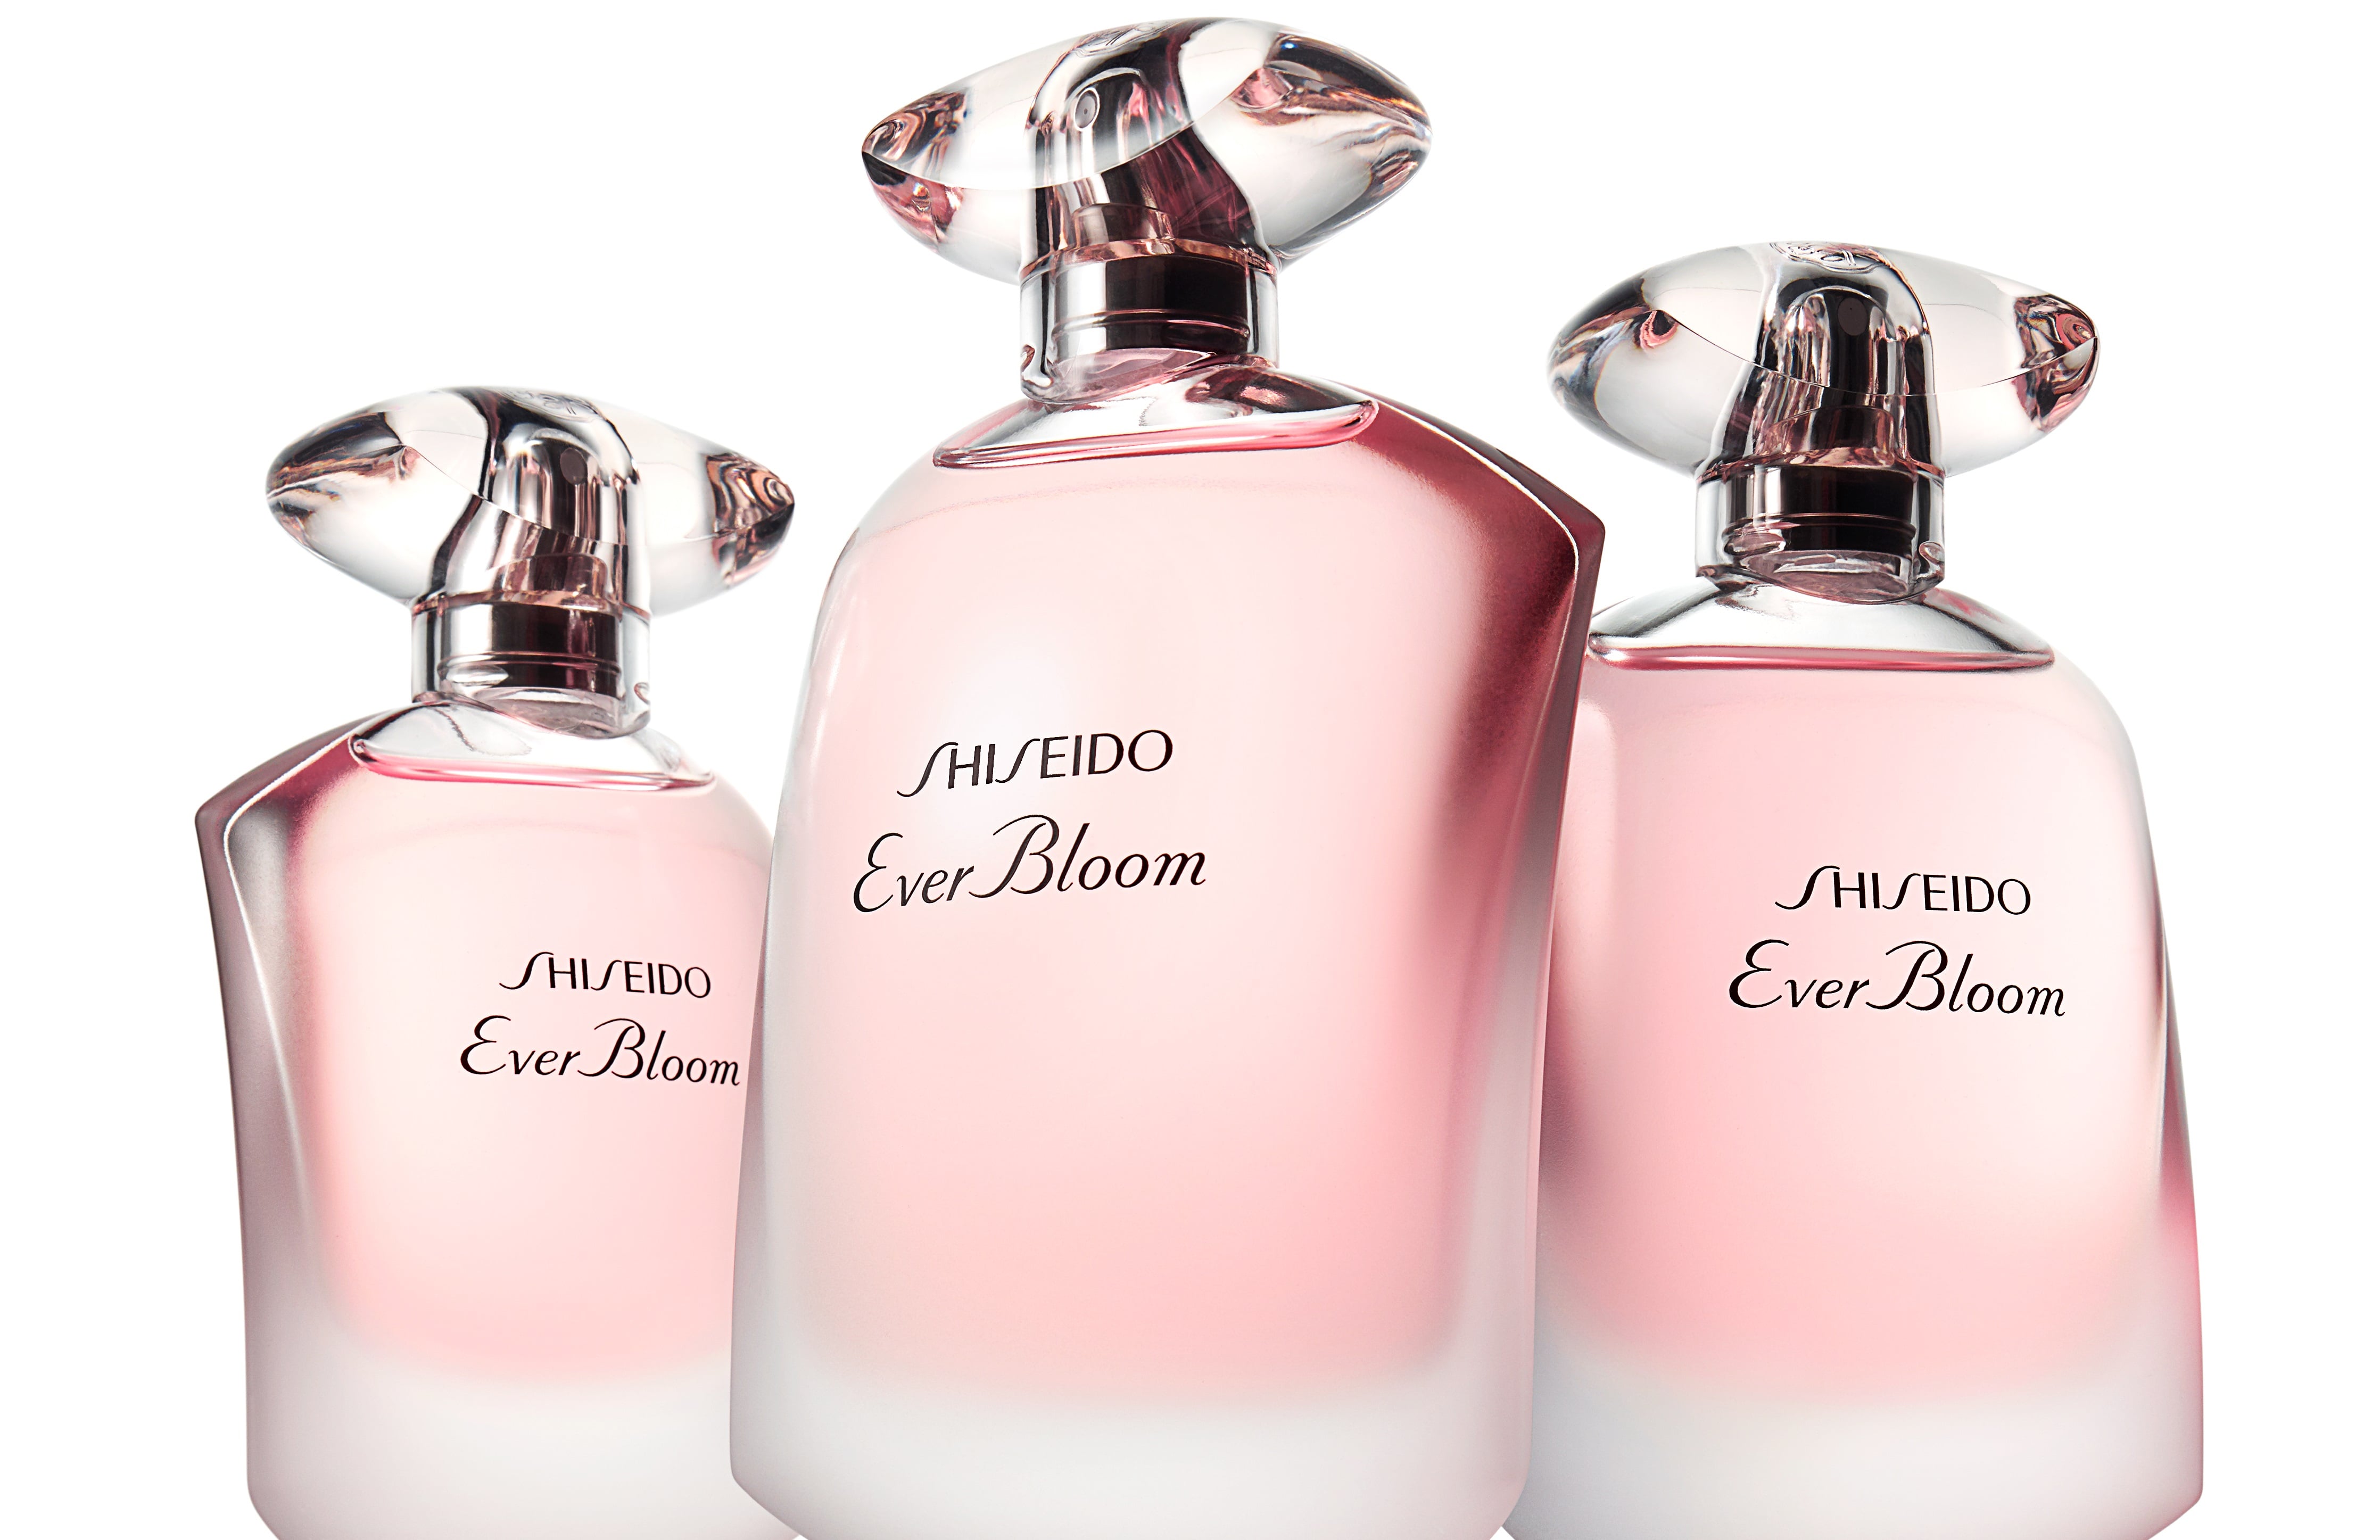 Shiseido parfüm